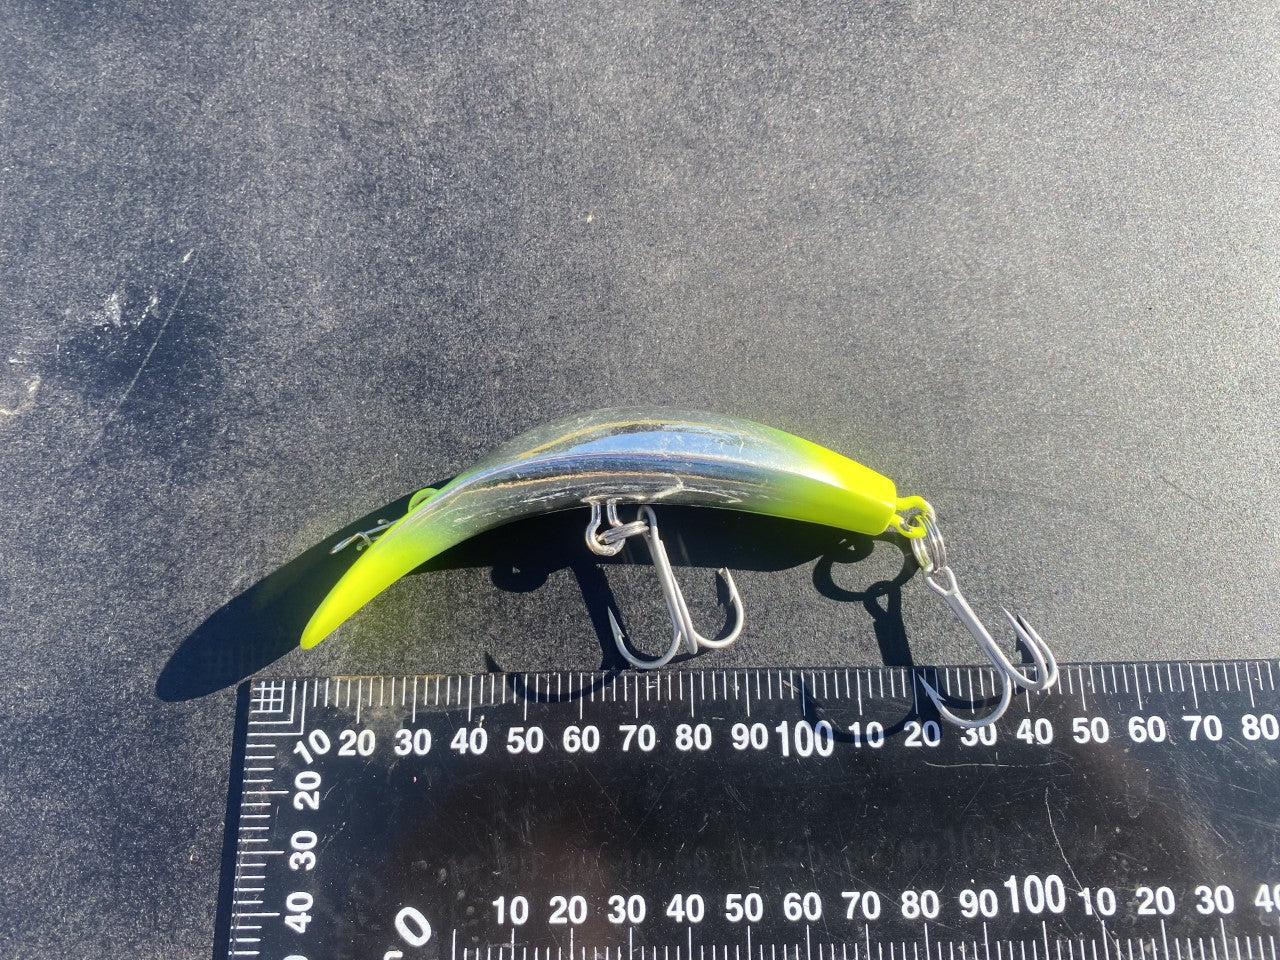 Luhr Jensen Kwikfish K14 Lure  Substitute Swimbaits & Fishing Tackle